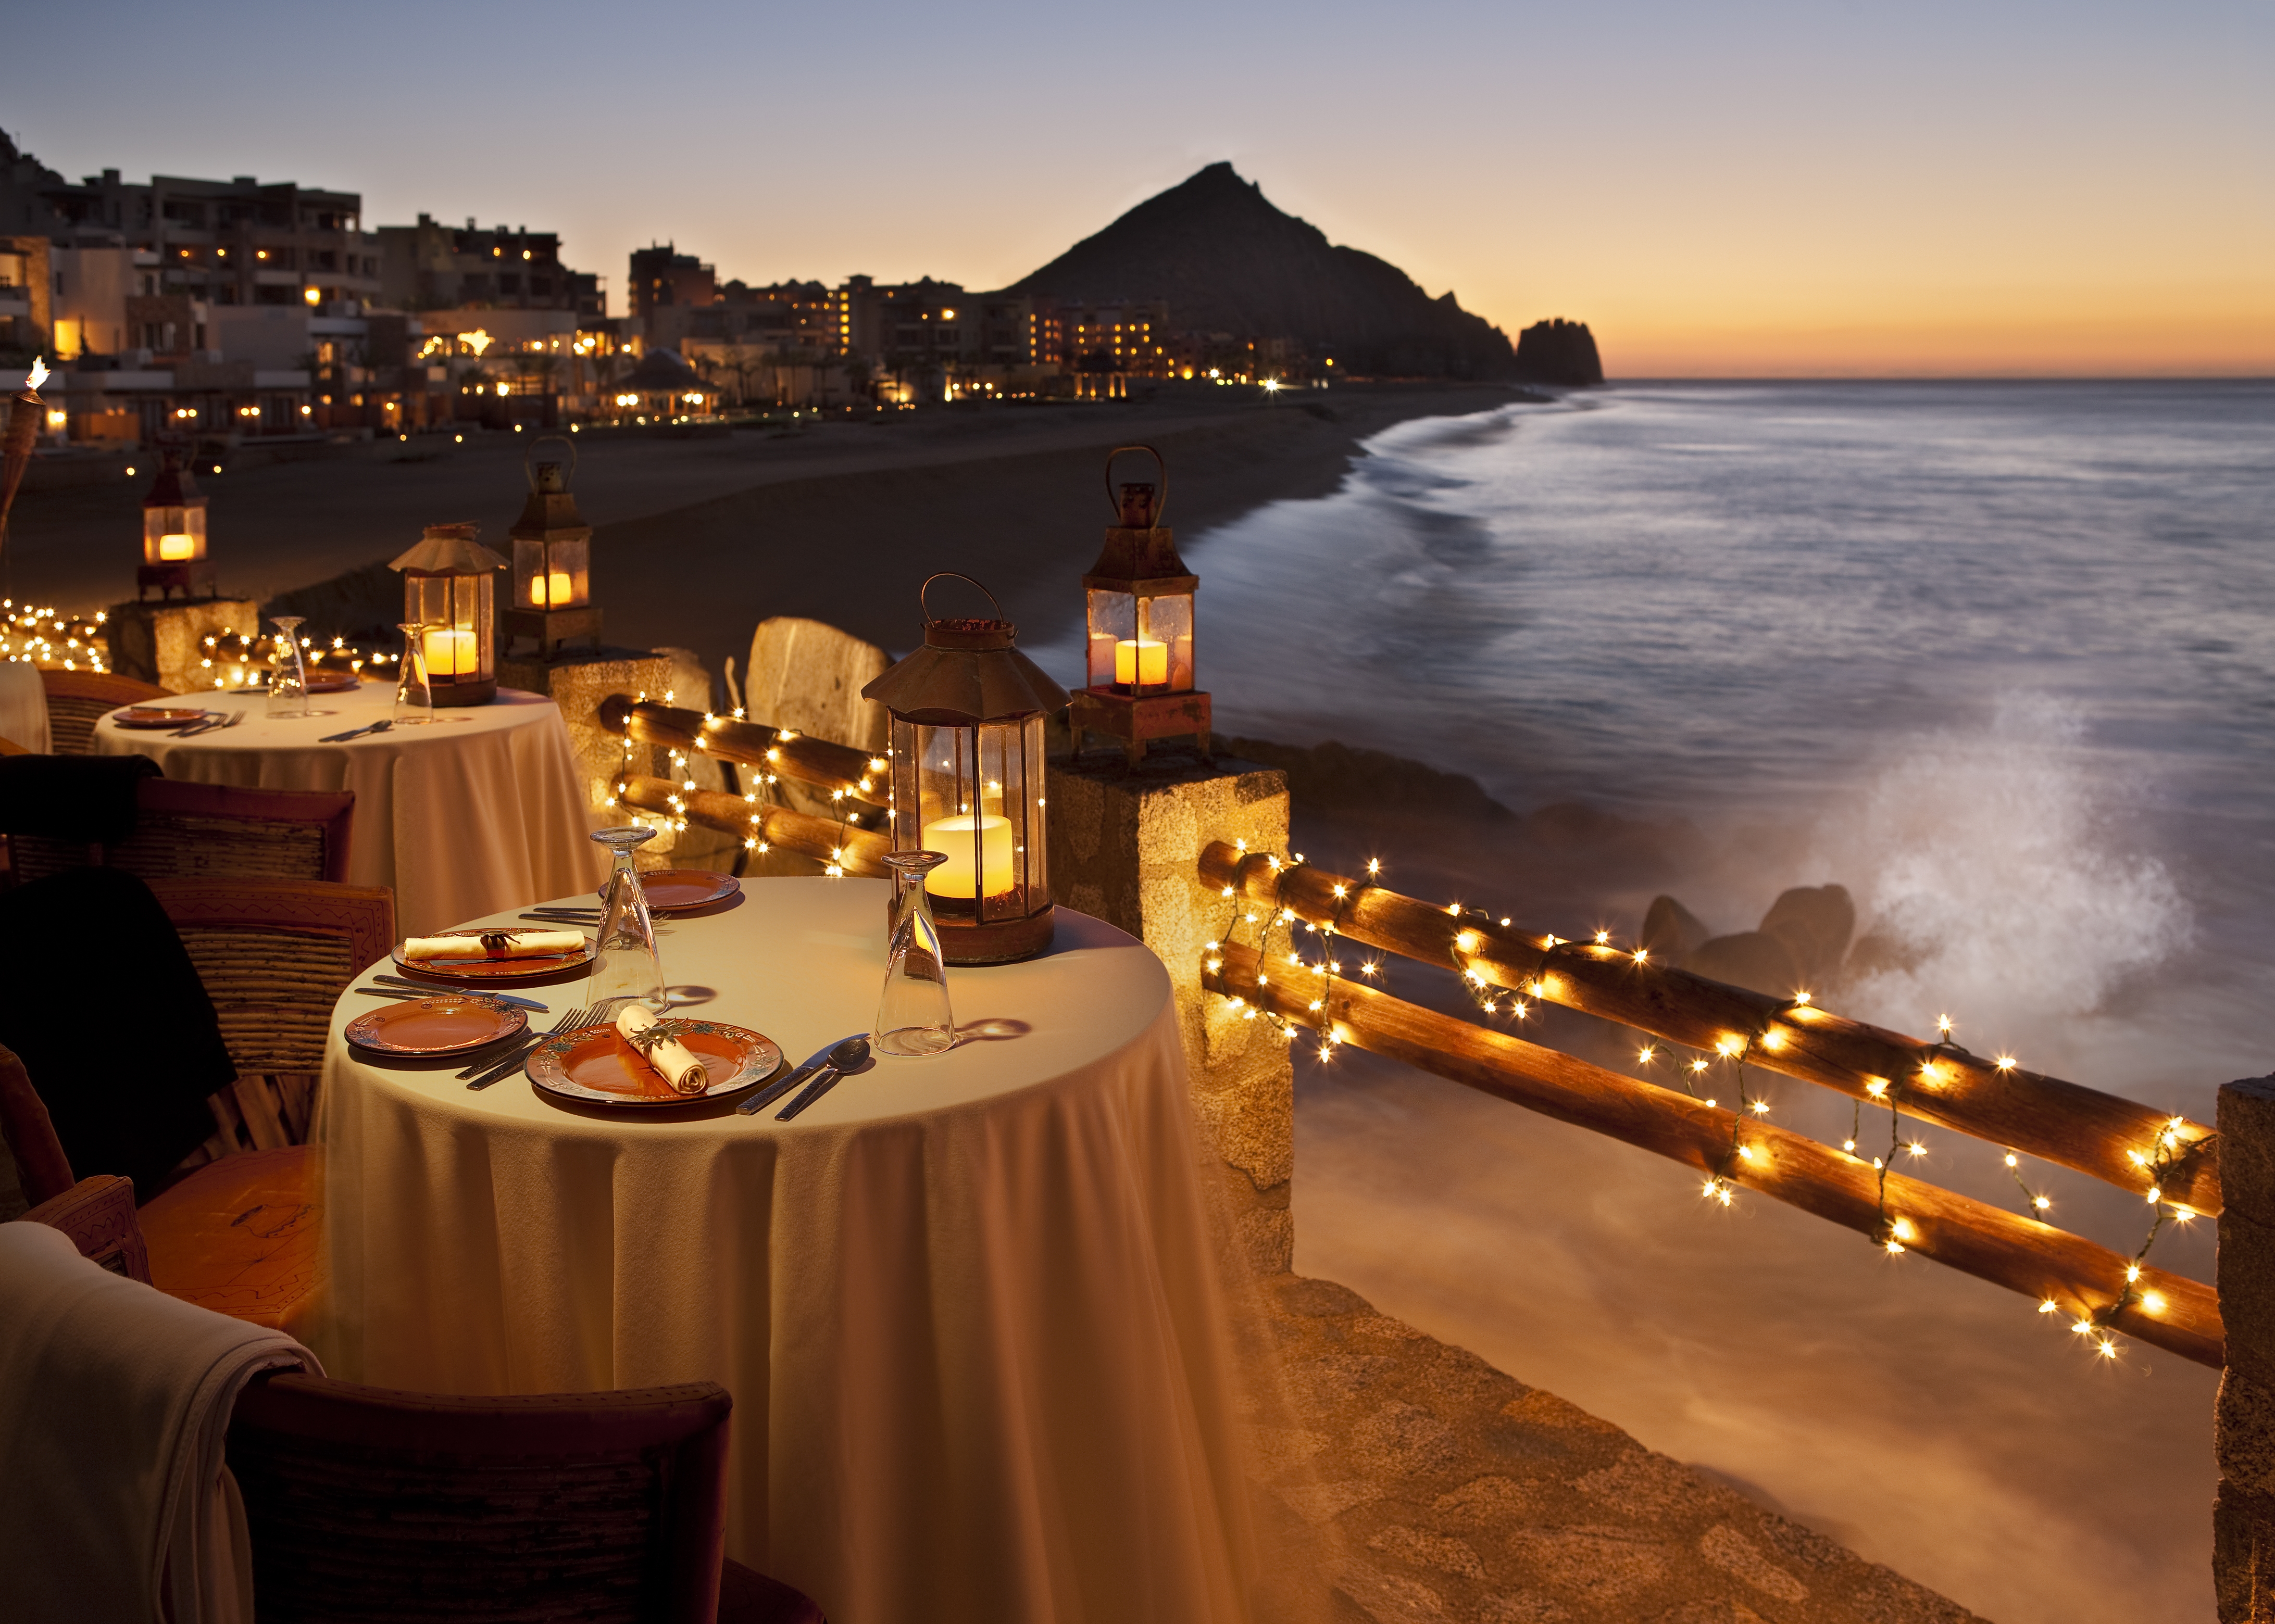 dinner, view, garland, nature, lights, coast, evening, table, supper, restaurant